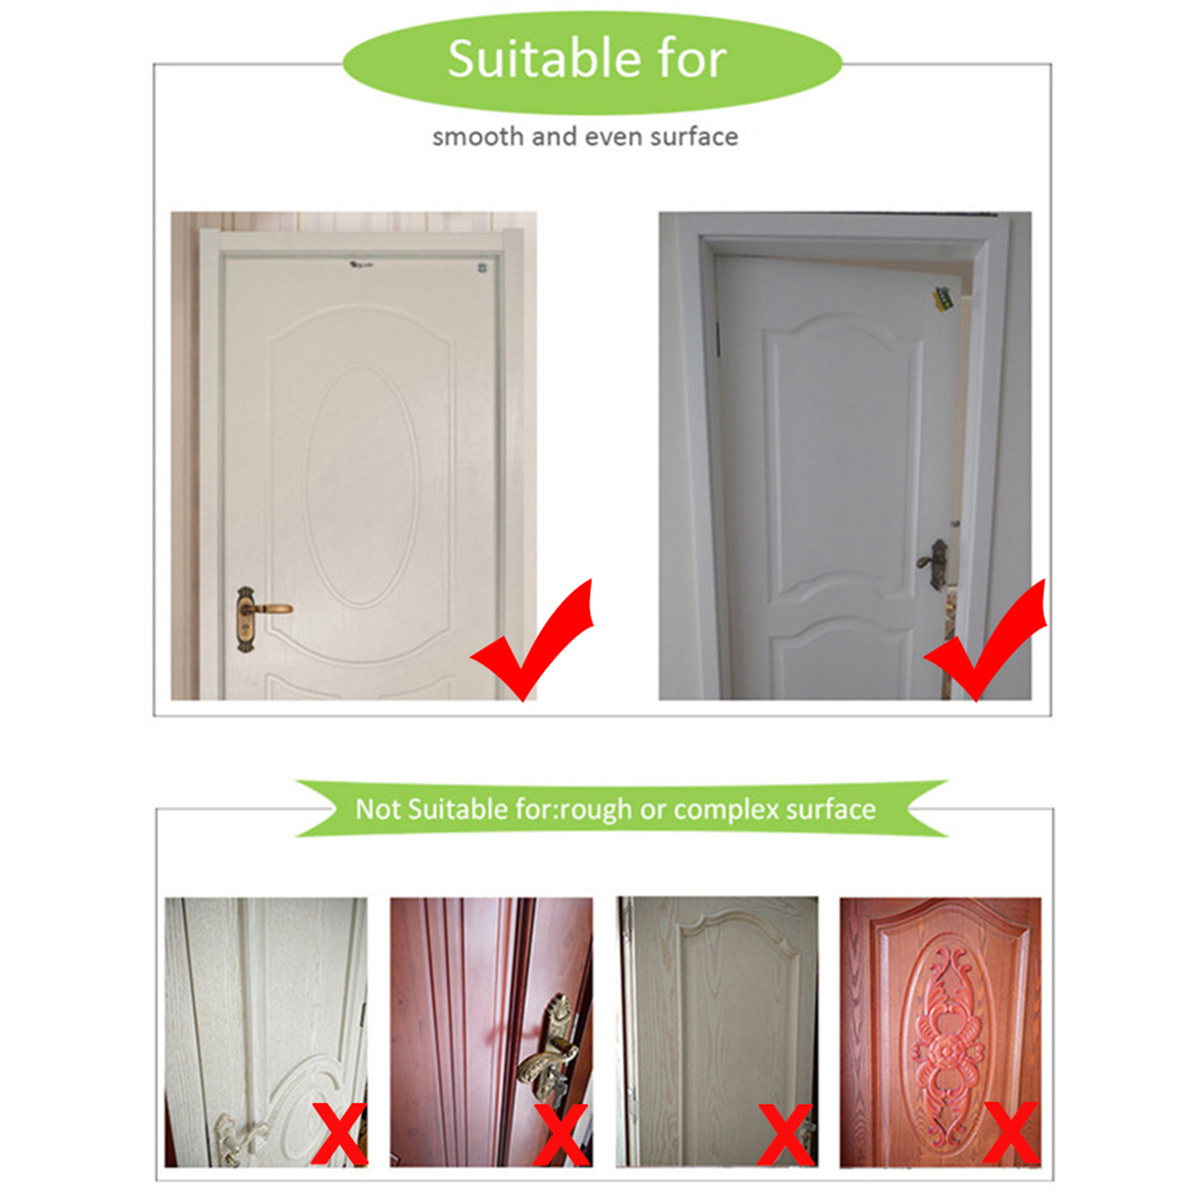 3D-Door-Wall-Sticker-Fridge-Deer-Sticker-Wrap-Mural-Decal-Art-Decor-Self-Adhesive-Room-1407108-9